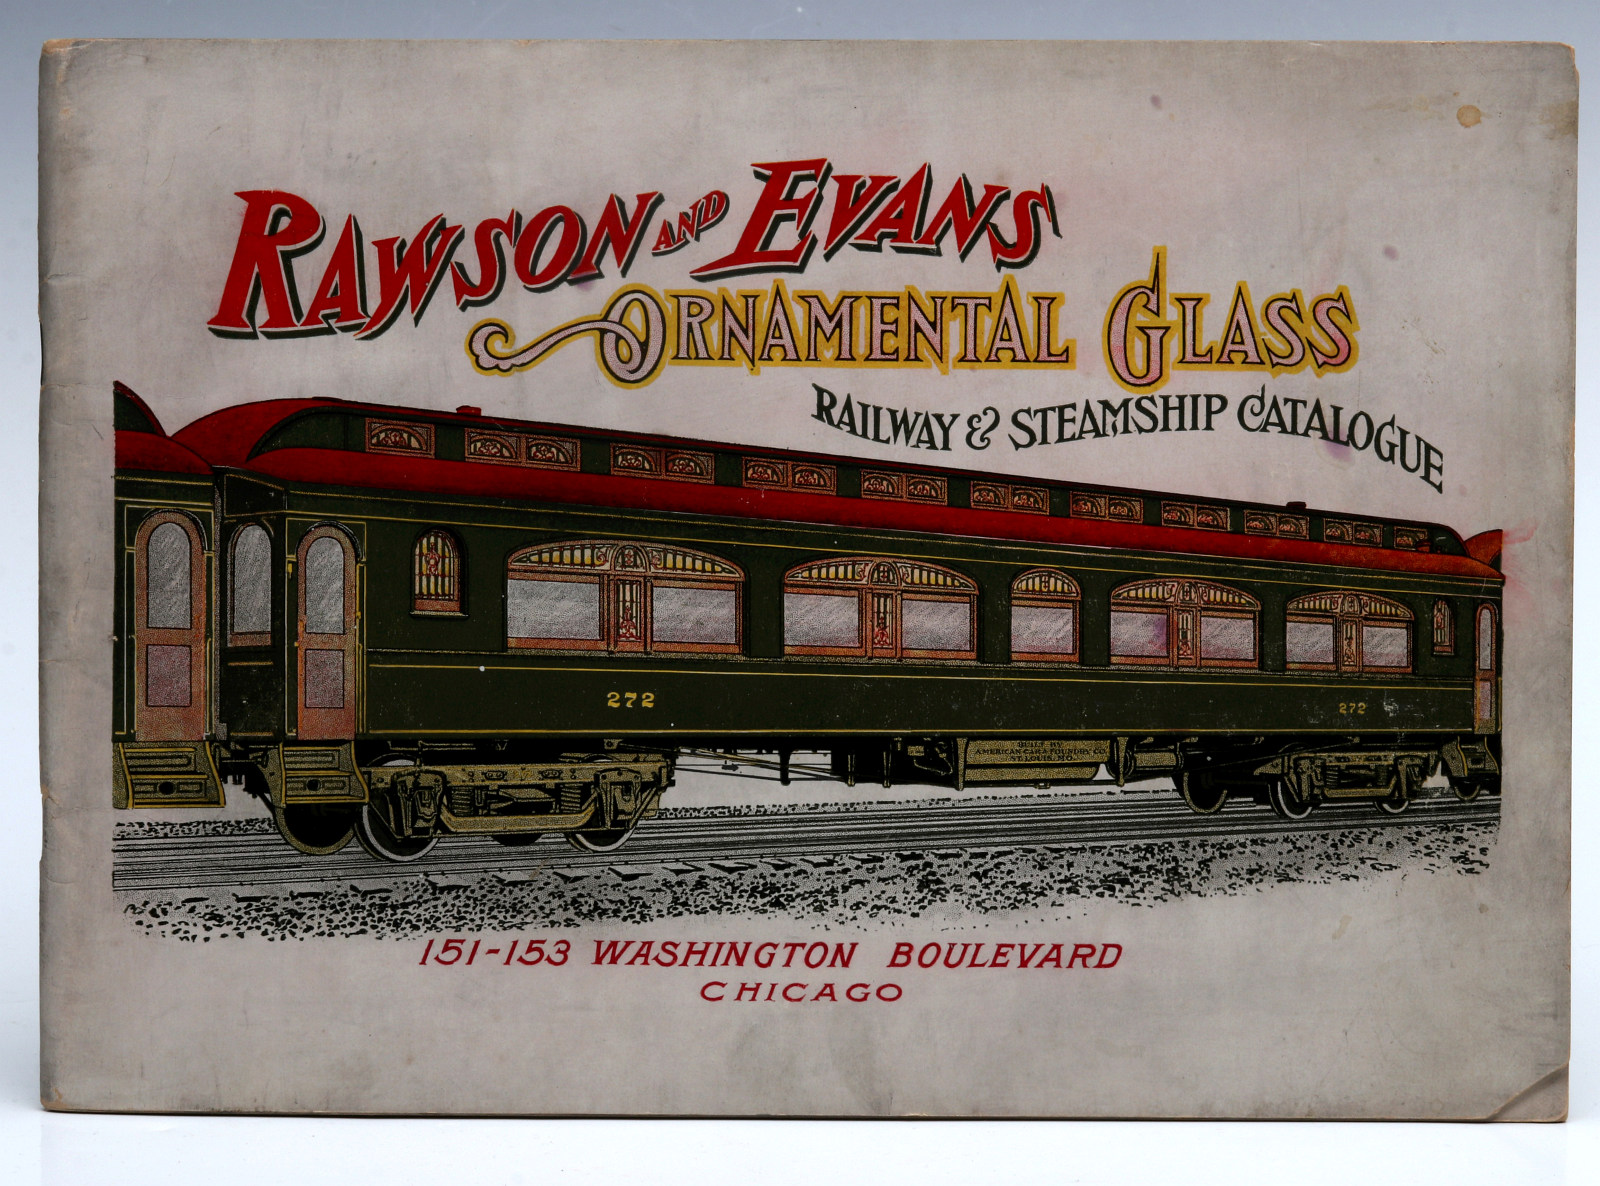 RAWSON EVANS RAILWAY STEAMSHIP ORNAMENTAL GLASS